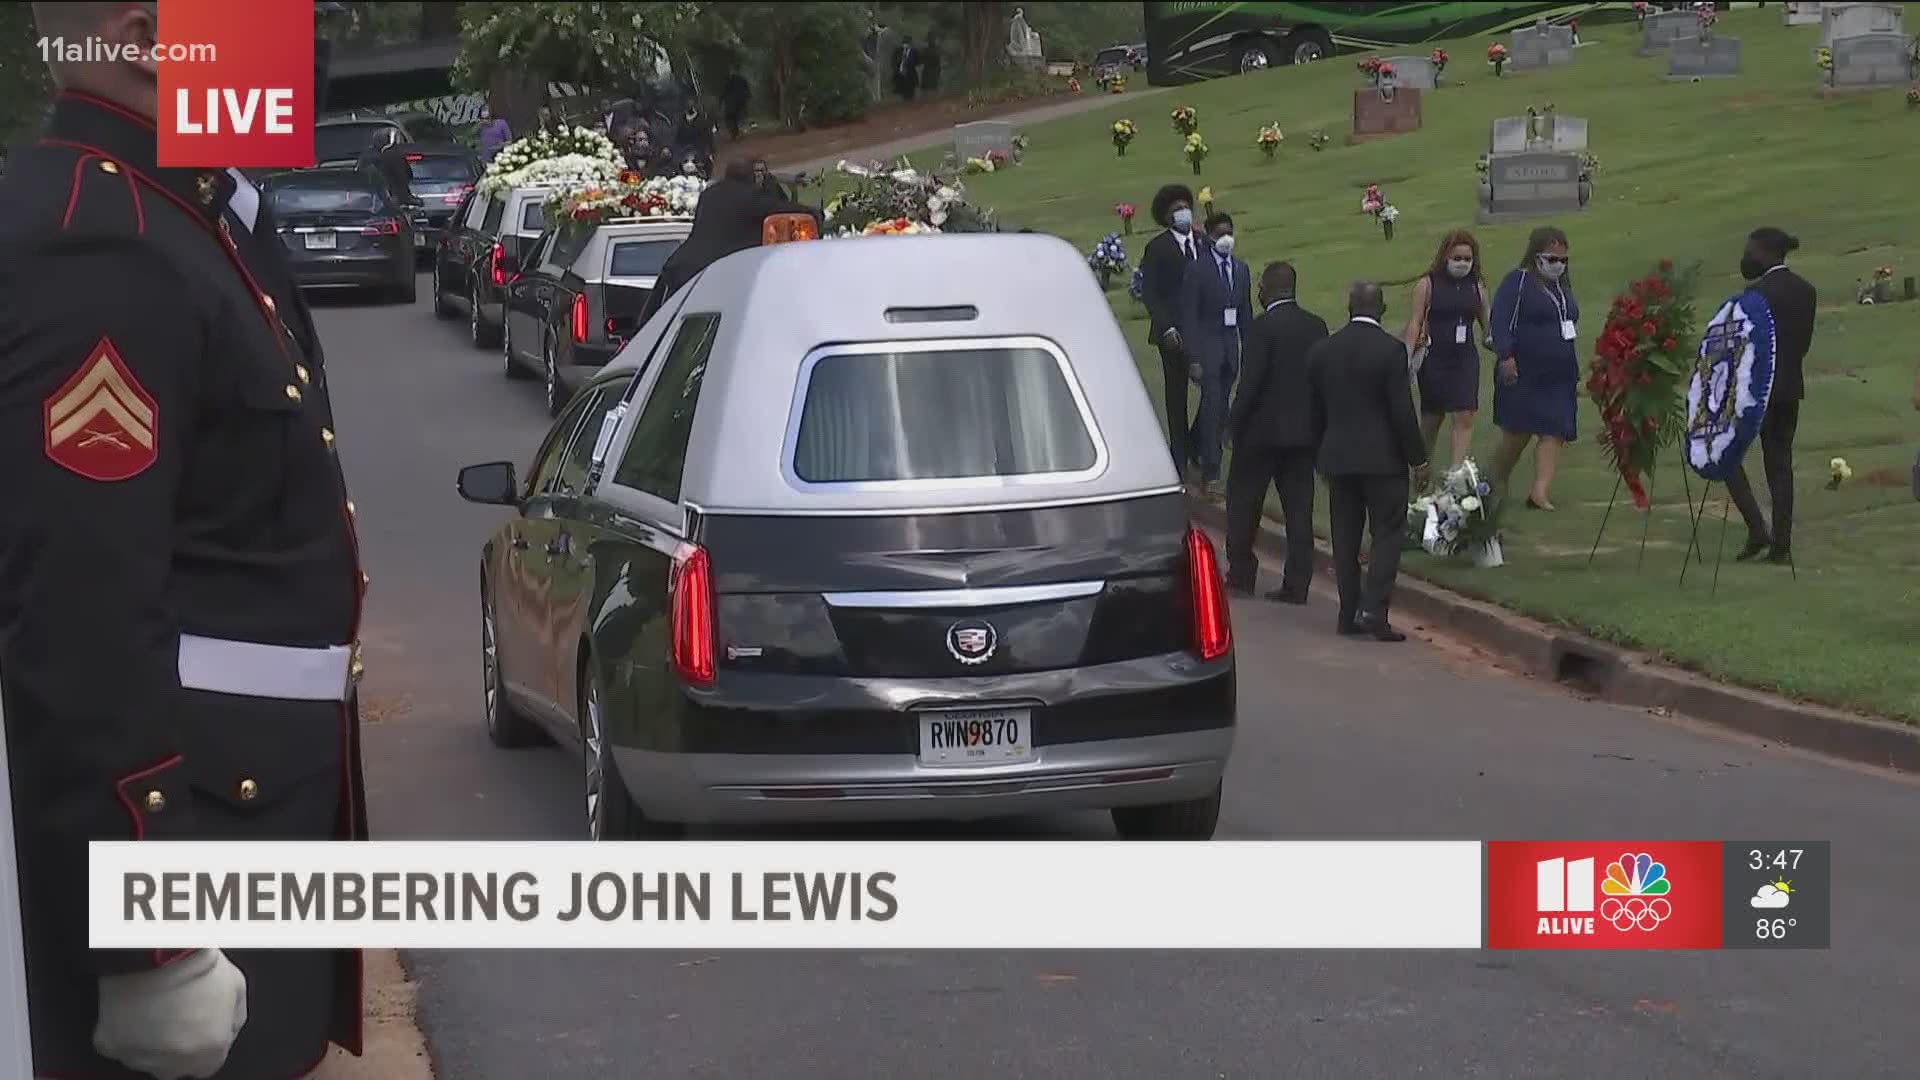 Former President Bill Clinton spoke at Lewis' funeral.